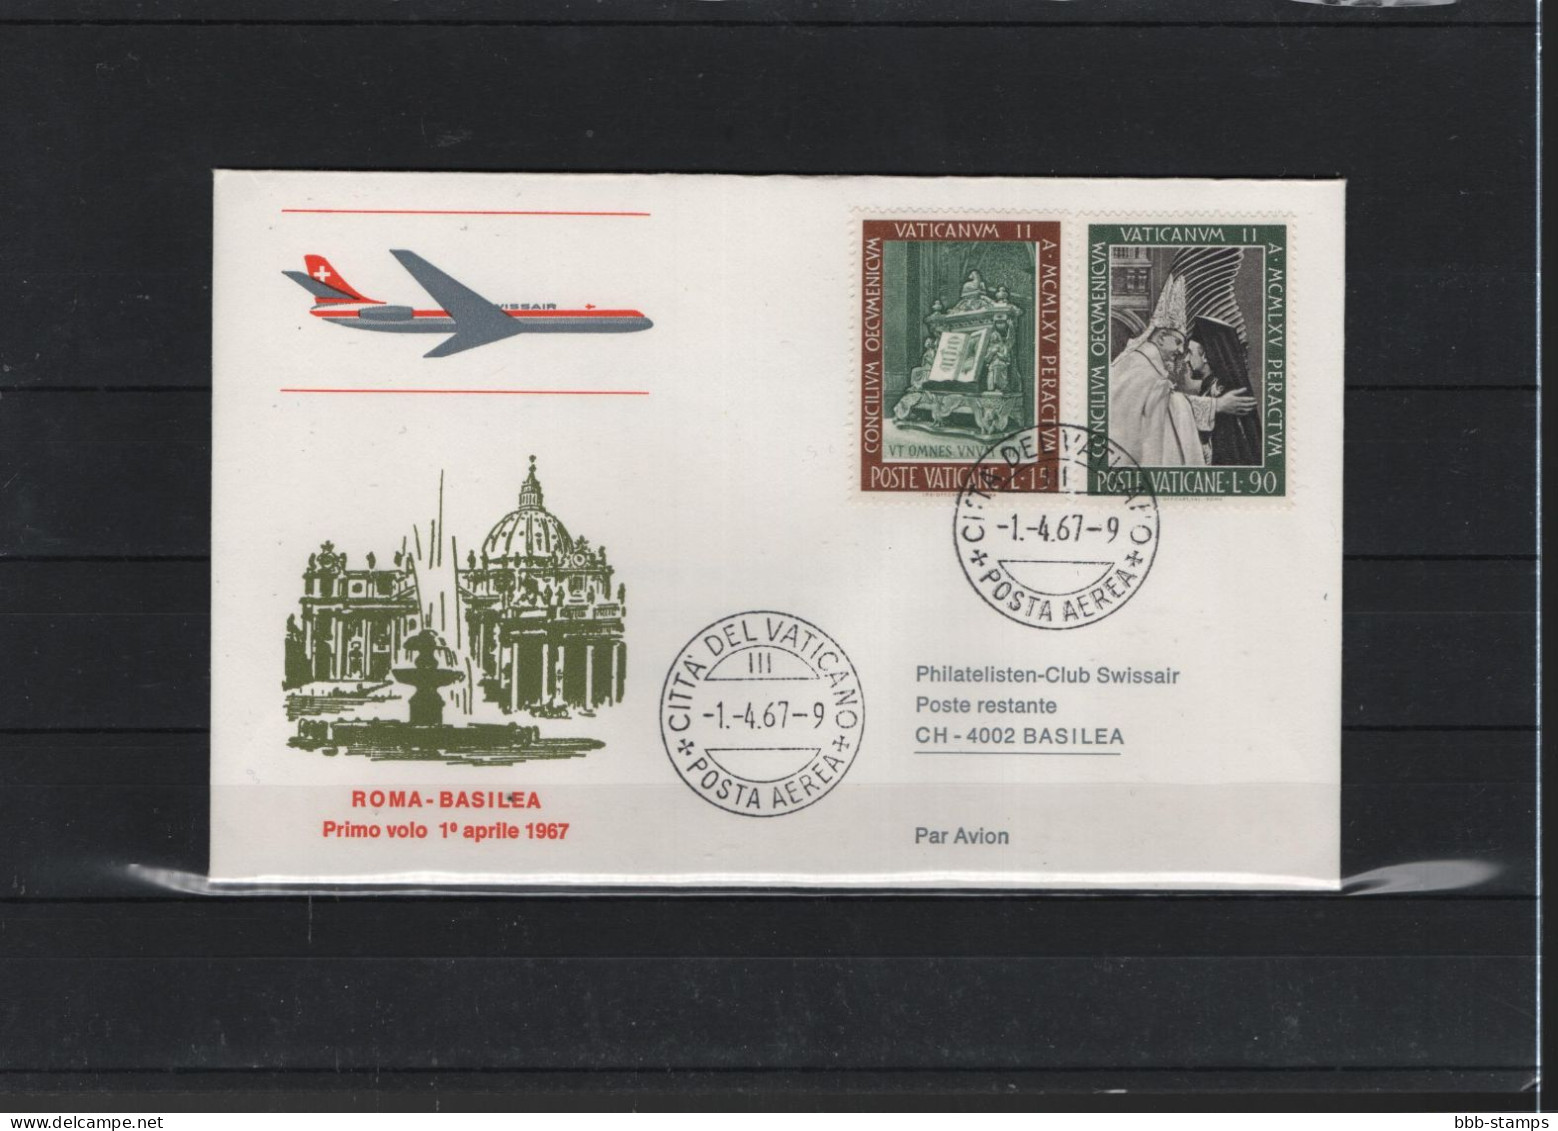 Schweiz Air Mail Swissair  FFC  1.4..1967 Basel - Rom VV - Premiers Vols